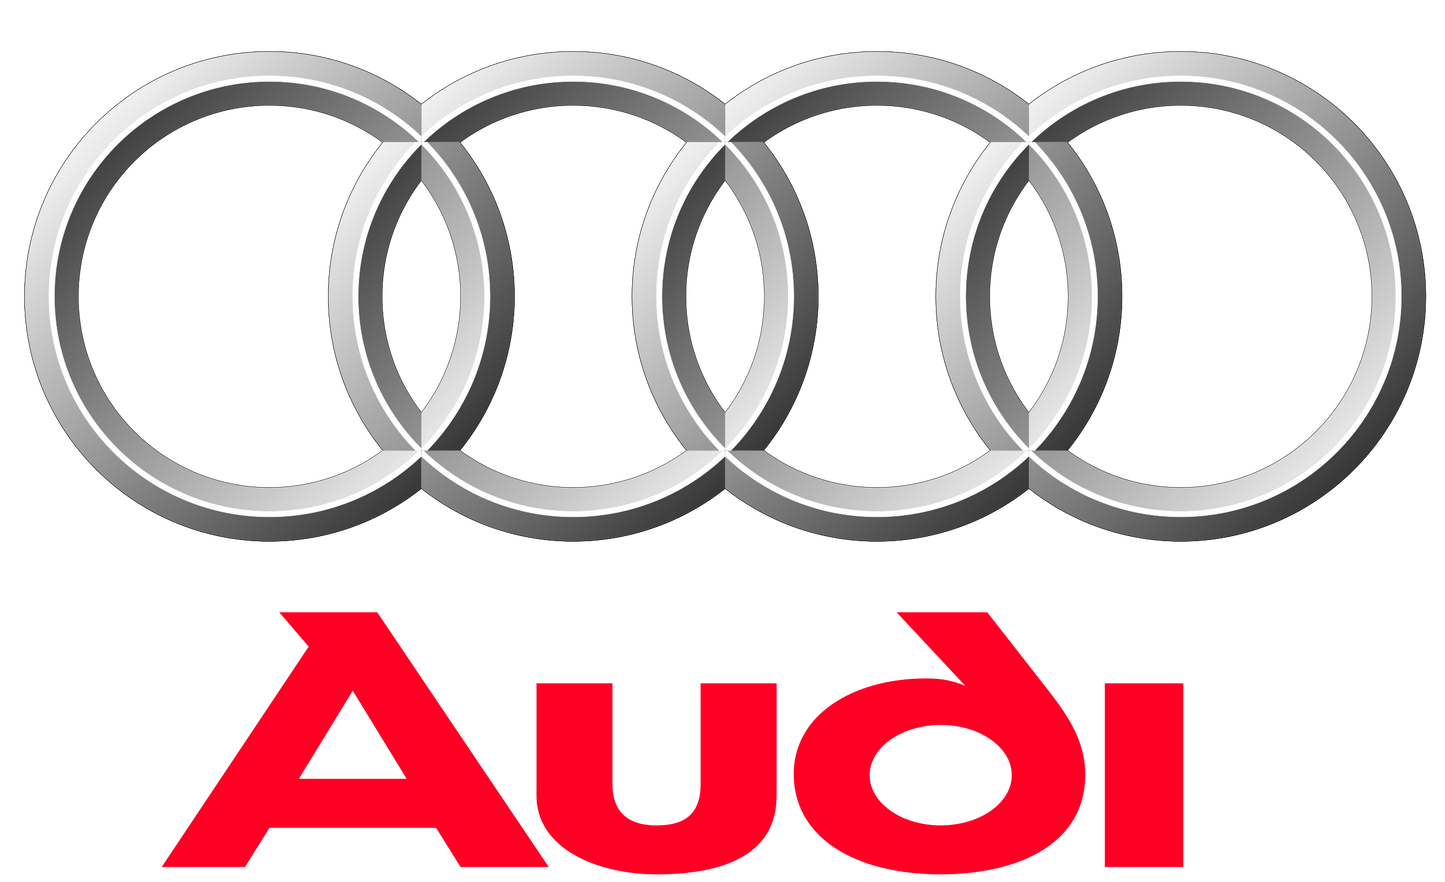 Código de radio de coche Audi